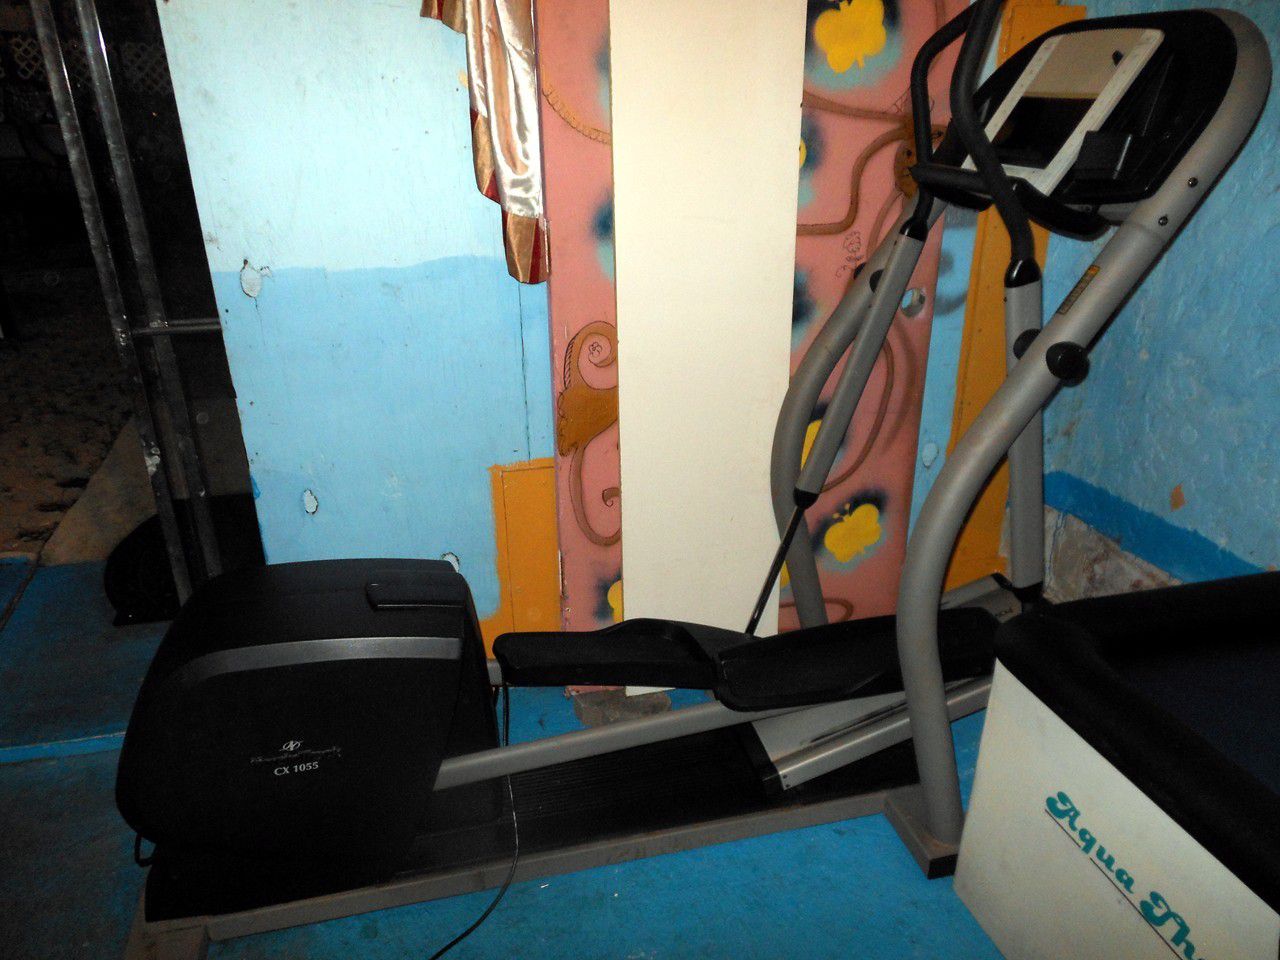 Nordictrack CX-1055 Elliptical Trainer Treadmill Workout Machine